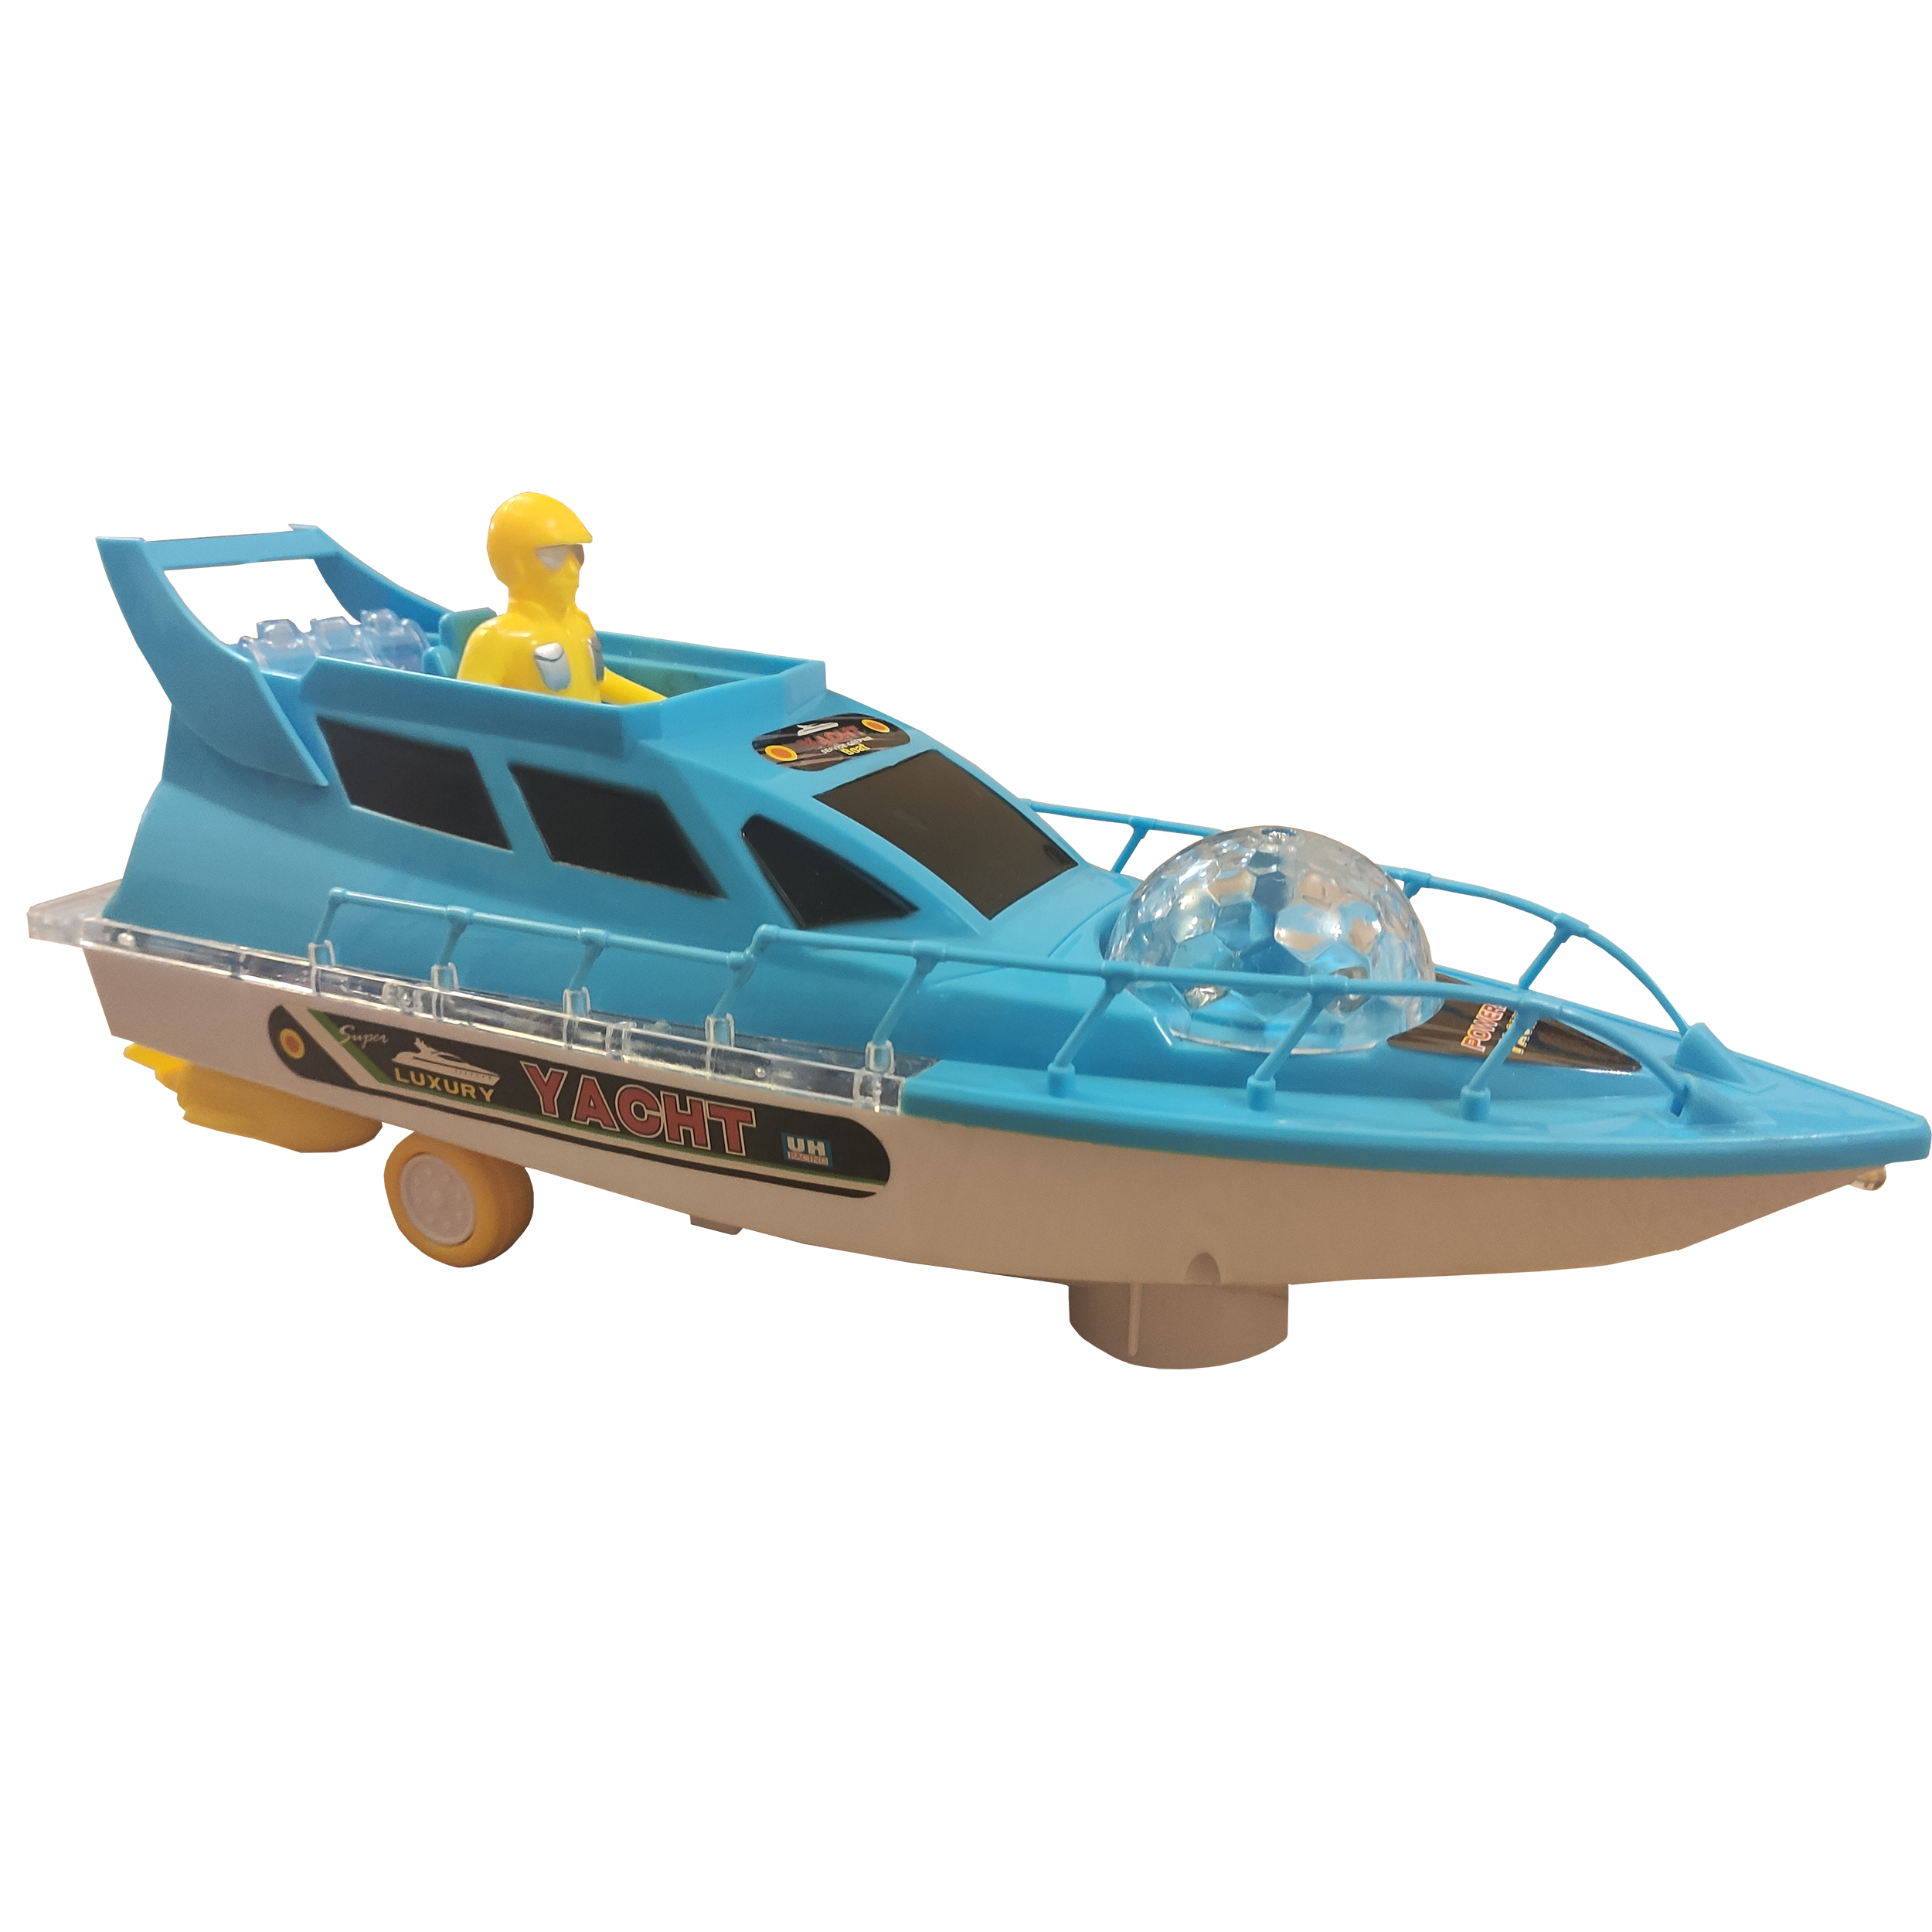 کشتی اسباب بازی مدل Ocean2020